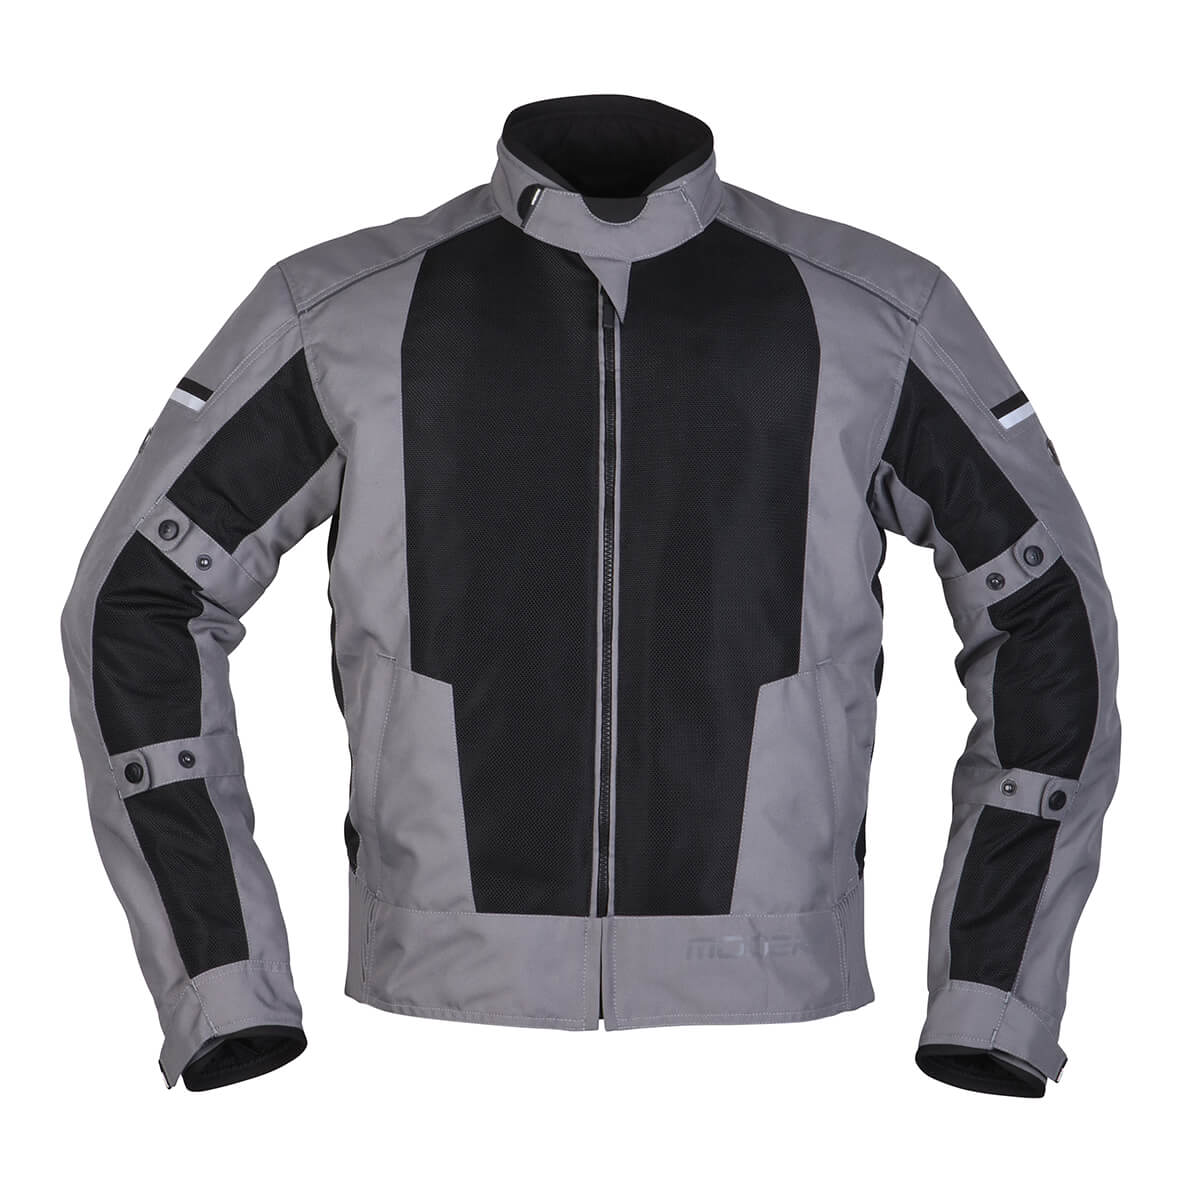 Image of Modeka Veo Air Jacket Black Gray Size L ID 4045765189856